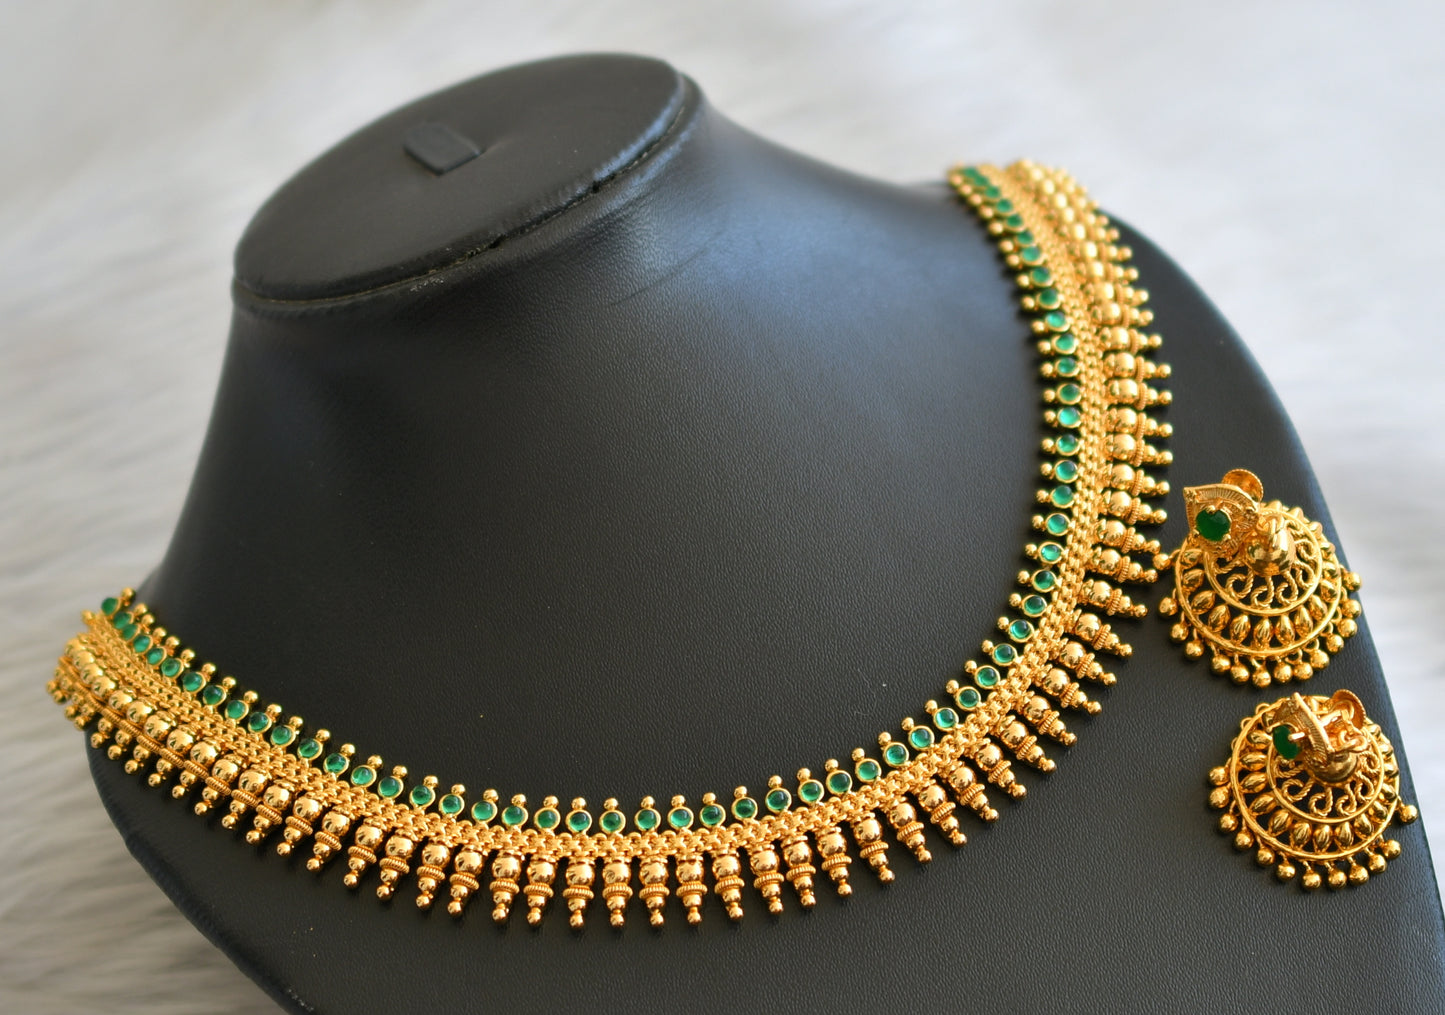 Gold tone real kemp stone kerala style necklace set dj-45294